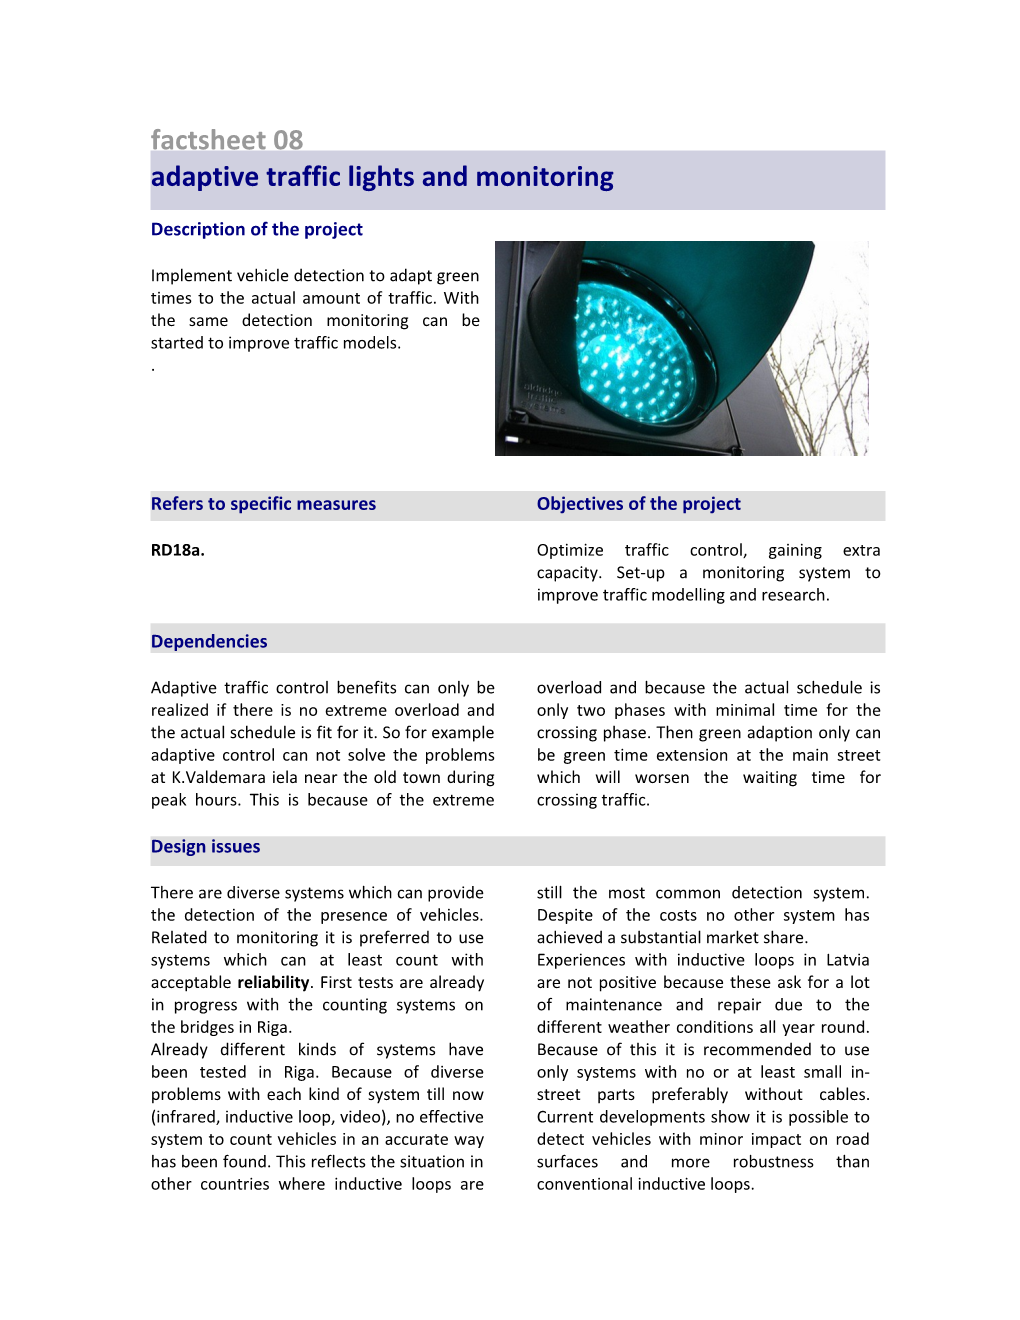 Adaptive Traffic Lights and Monitoring